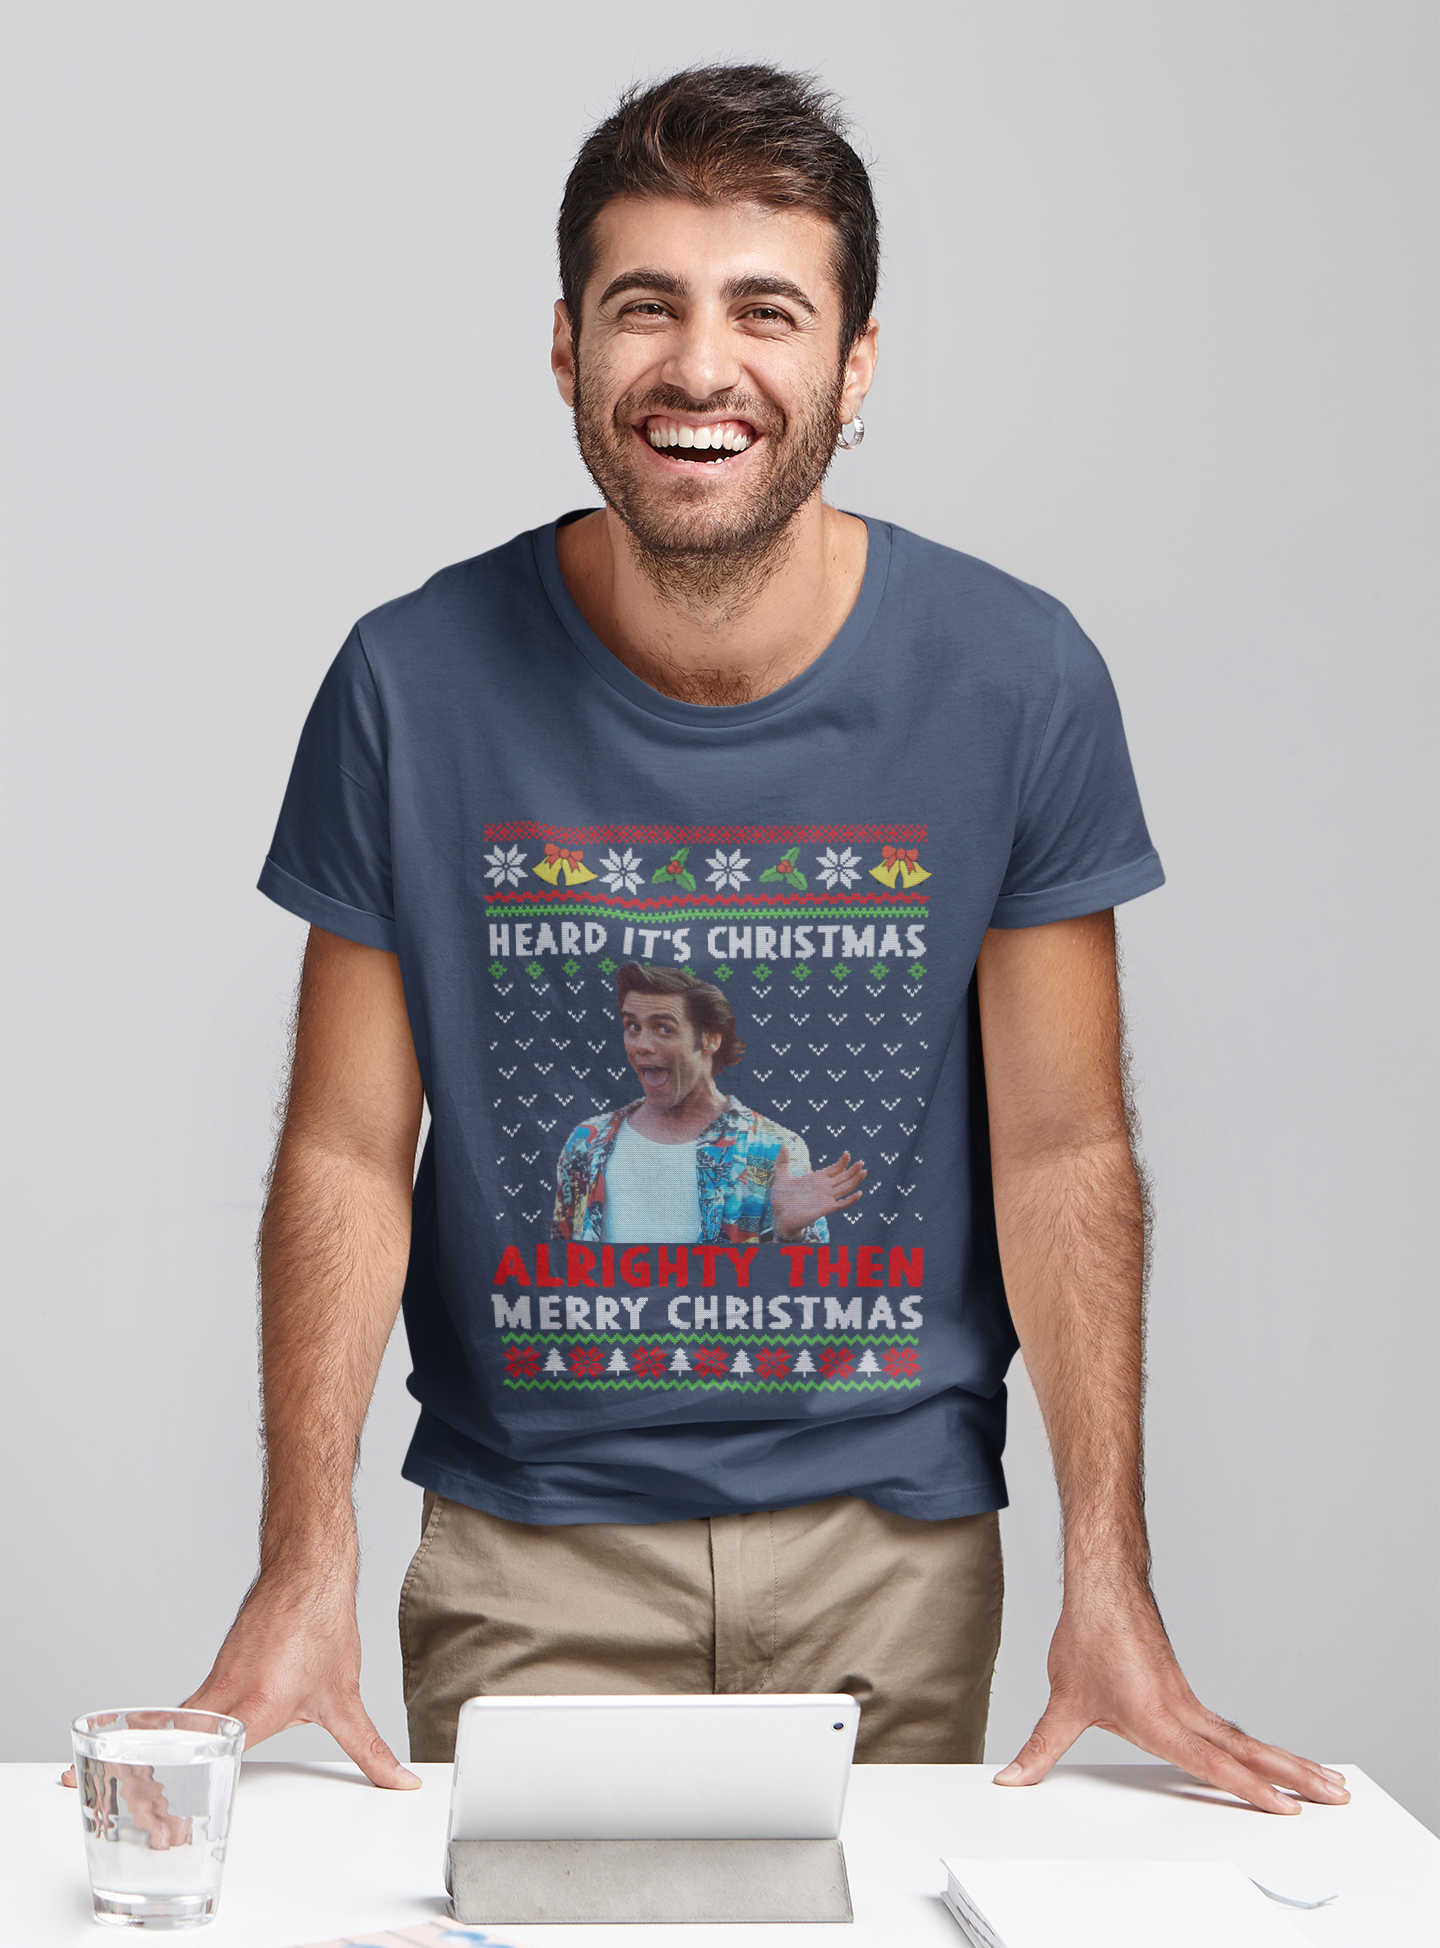 Ace Ventura Pet Detective T Shirt, Ace Ventura T Shirt, Heard Its Christmas Alrighty Then Merry Christmas Tshirt